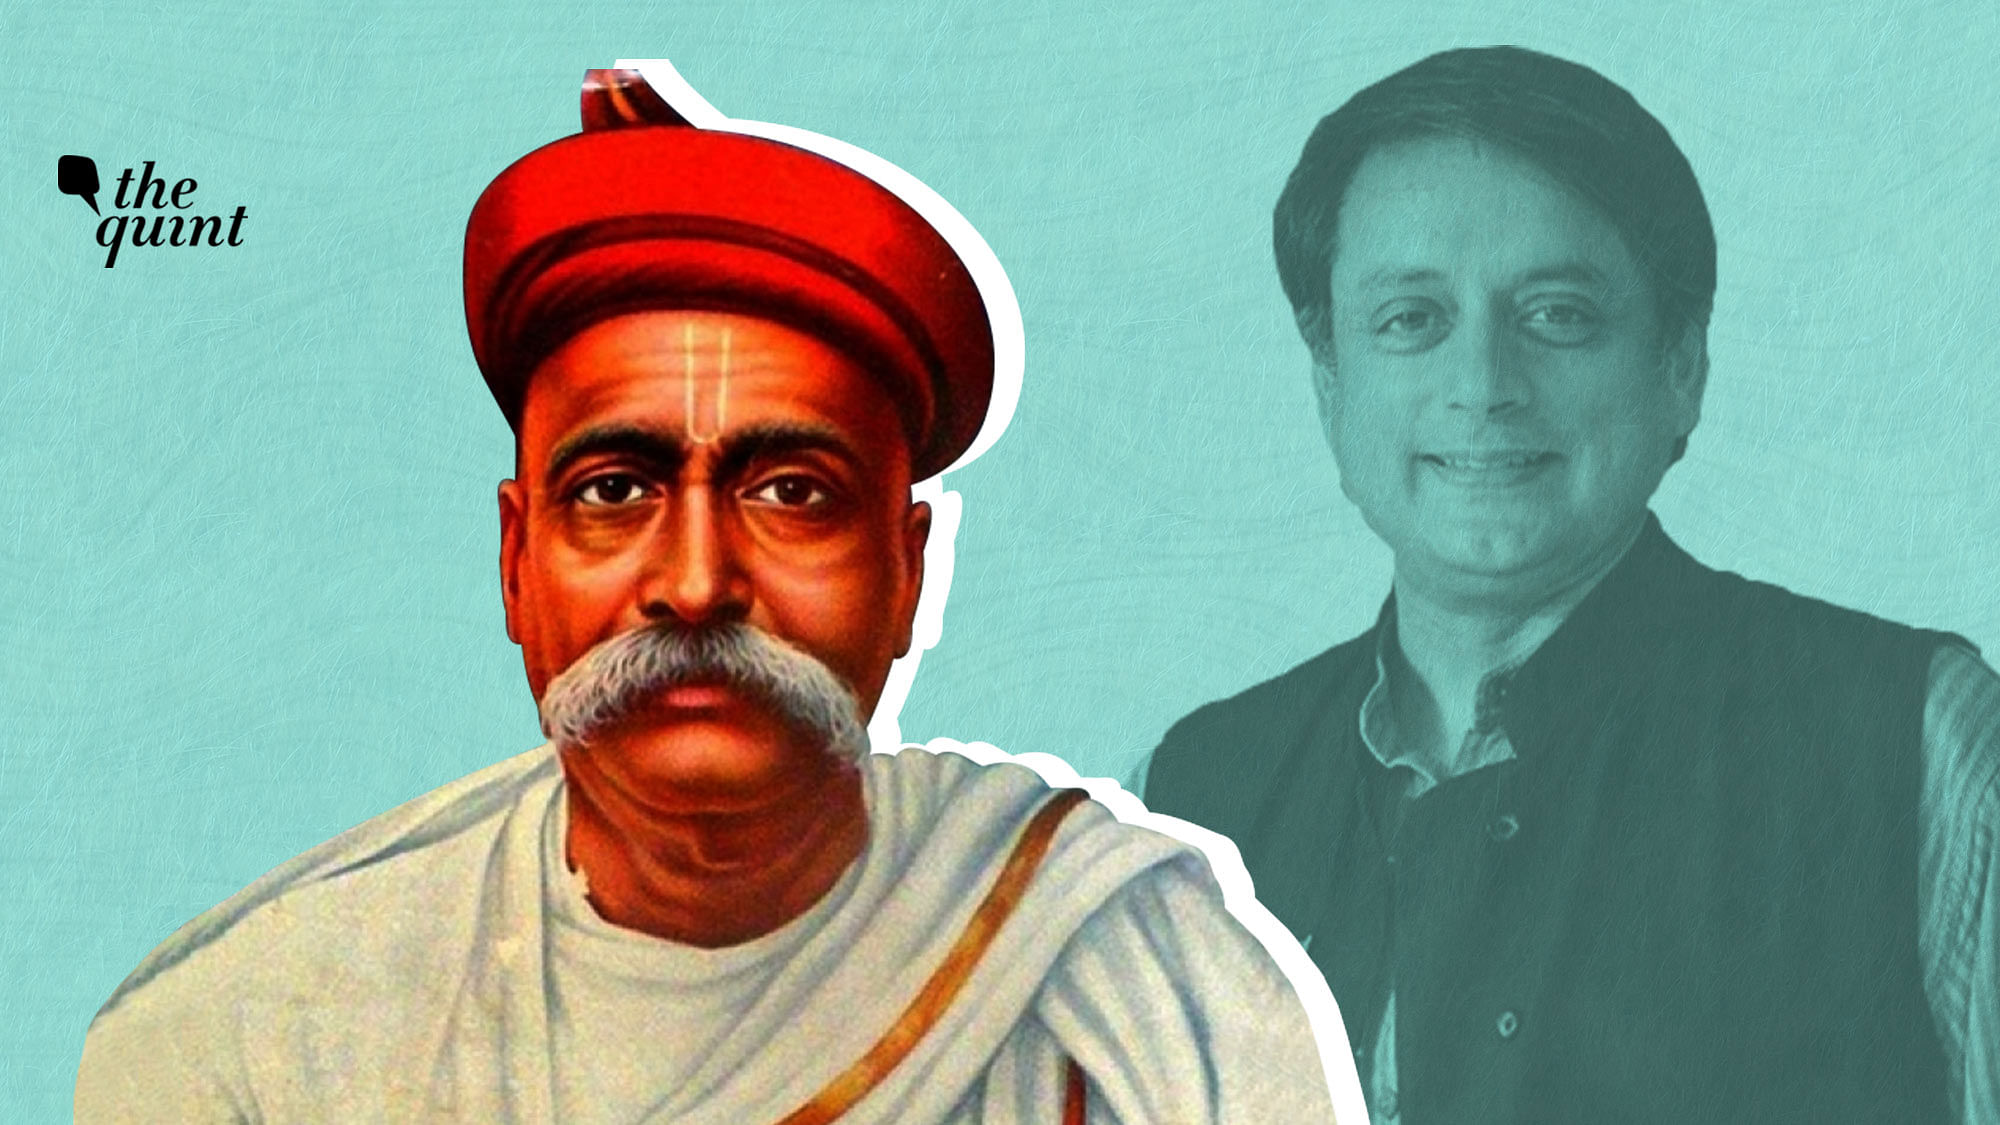 Image of Lokmanya Tilak and Dr Shashi Tharoor used for representational purposes.